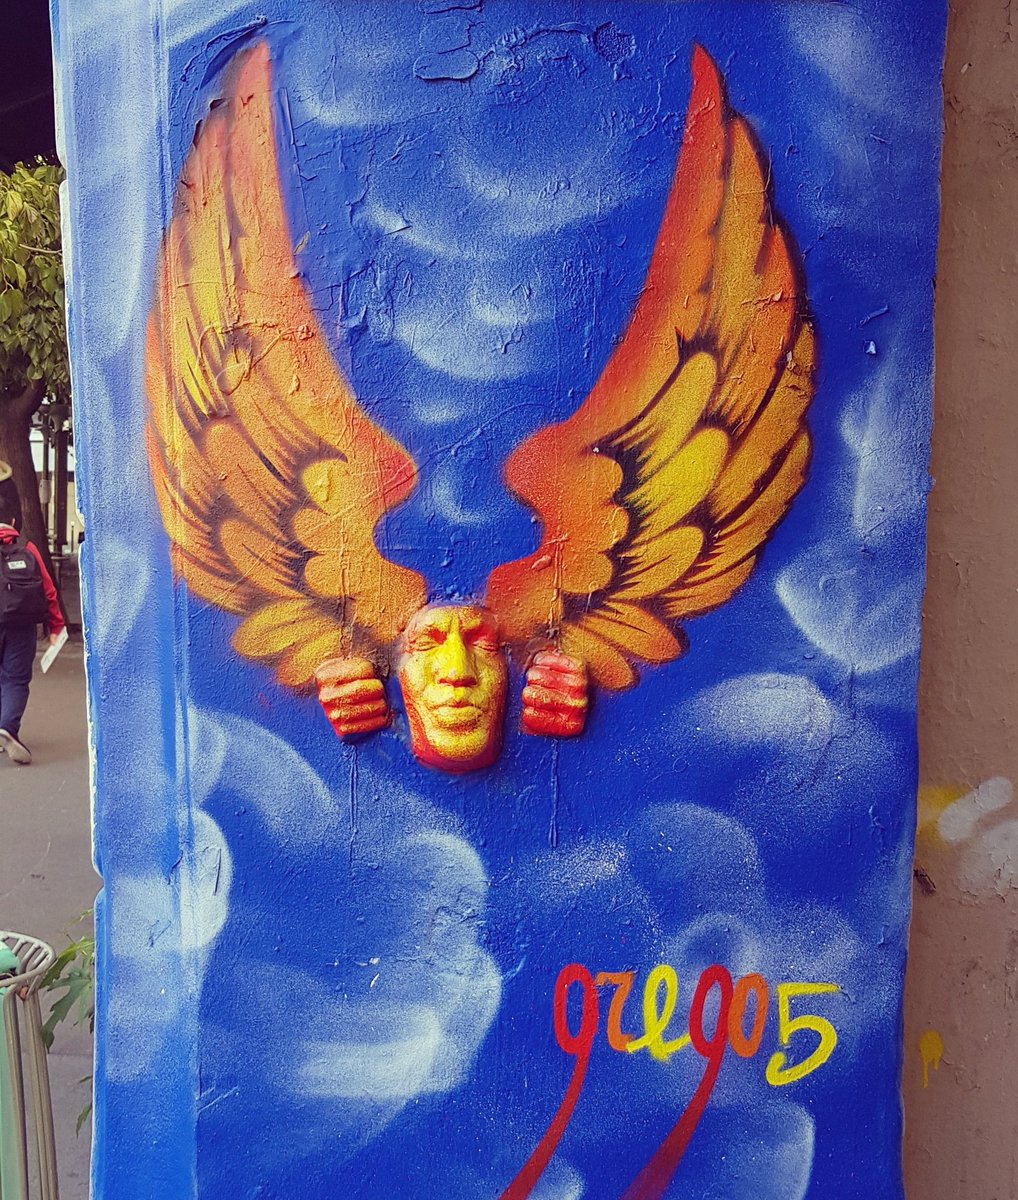 By @GregosArt #greg05 #streetart #streetartparis #streetartparis18 #Paris18 #18éme #graffitiworld #instart #graffitilovers #urbanart #artderue #rue #angel #picoftheday #artlovers #instanice #urbanwalls #wall #wallporn #instagraffiti #graffitiporn #streetartistry #instagraff